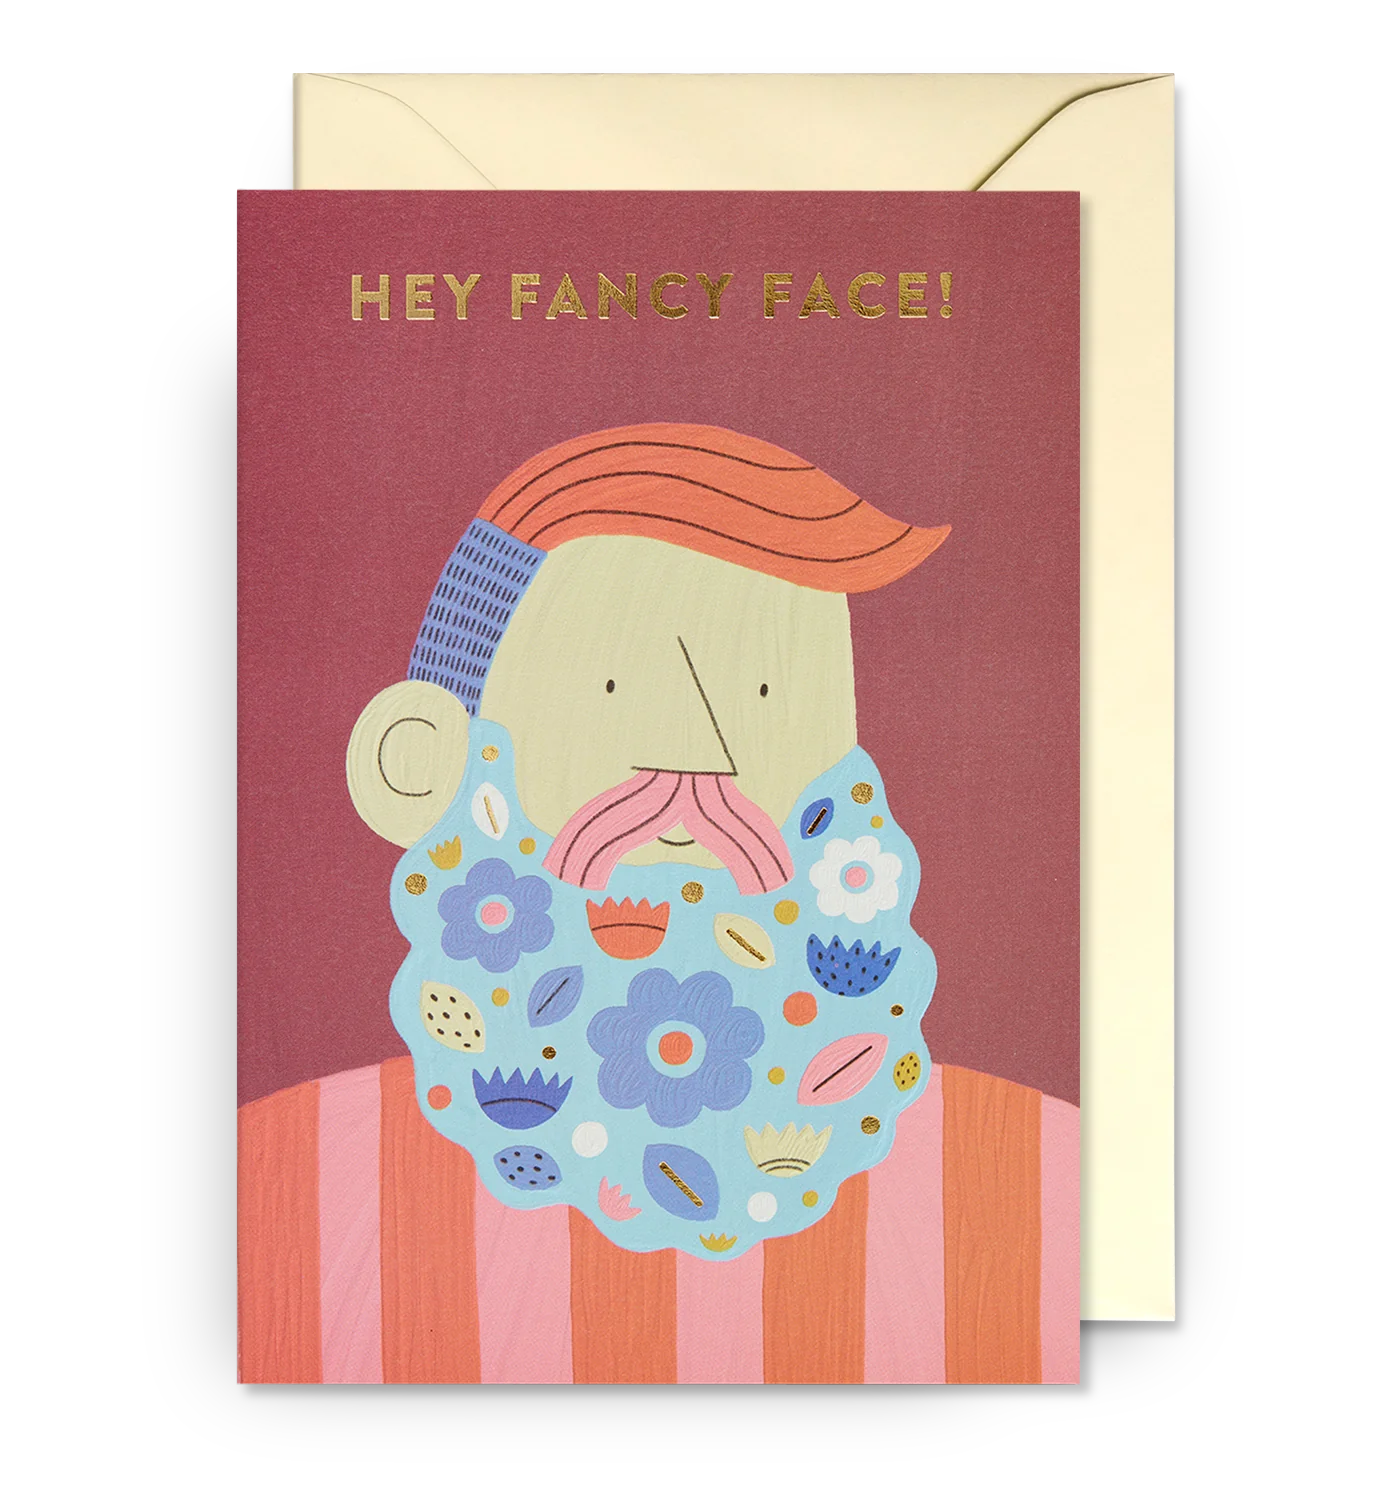 Hey Fancy Face! Greeting Card by Molly Egan